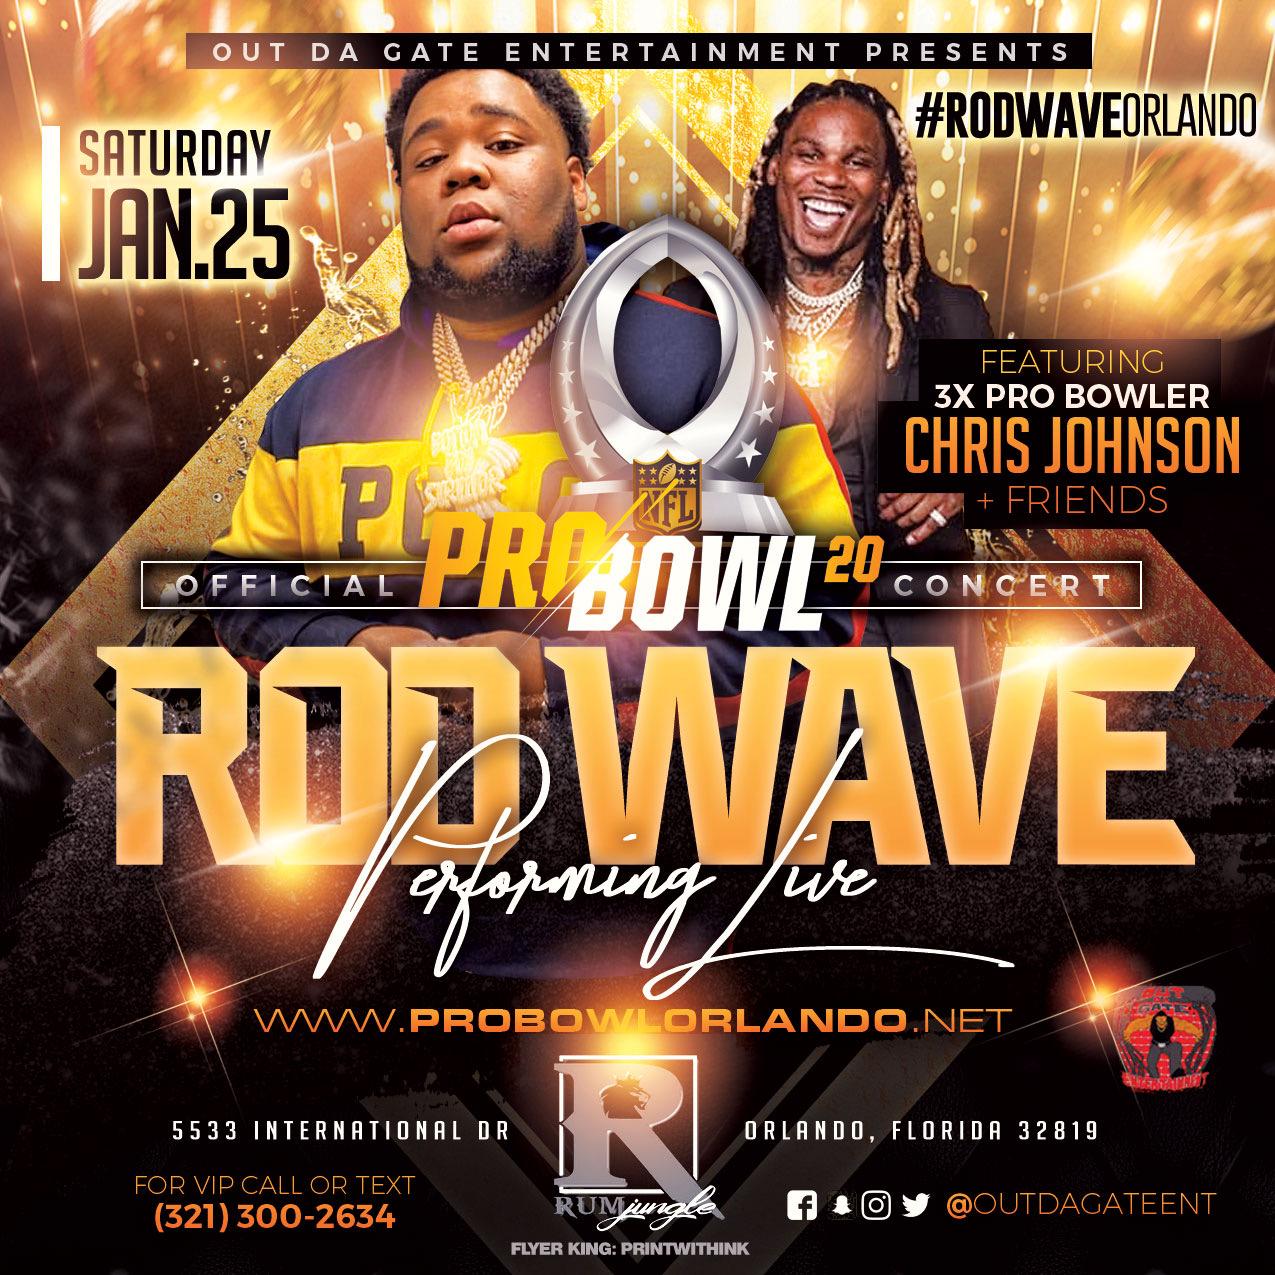 Rod Wave Concert Rumjungle Orlando event Probowl weekend 